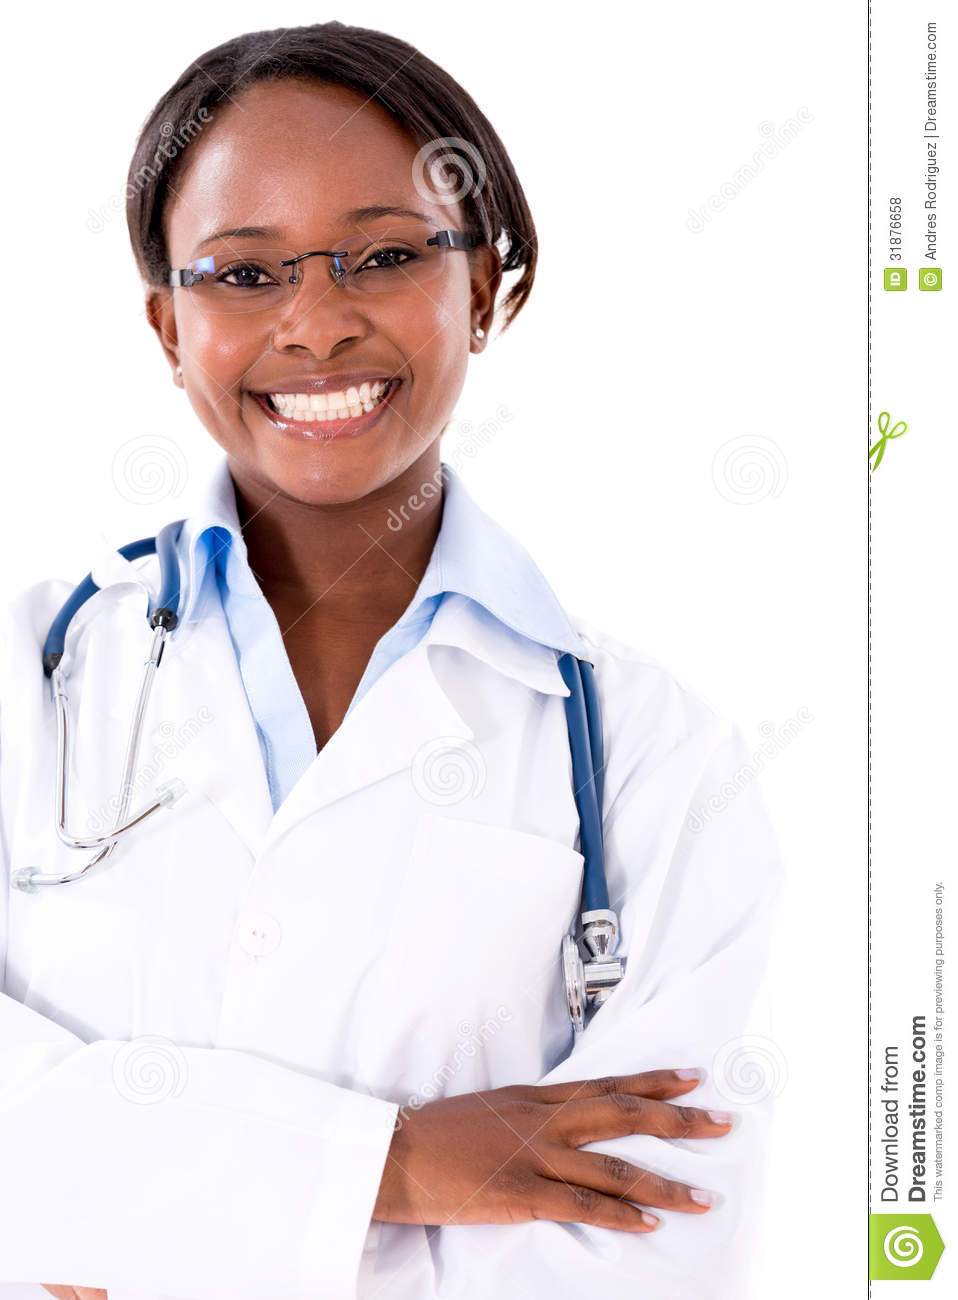 Black Female Doctor Royalty Free Stock Photos   Image  31876658